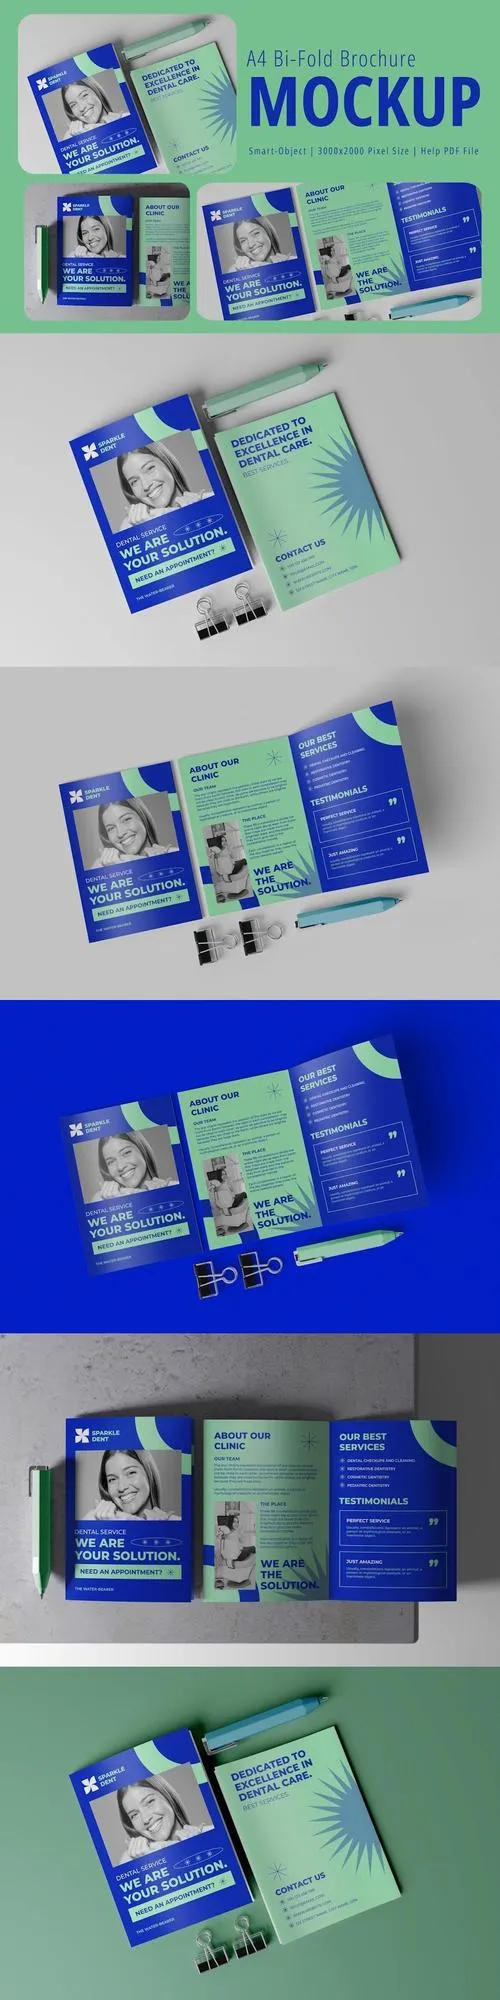 A4 Bi-Fold Brochure Mockup